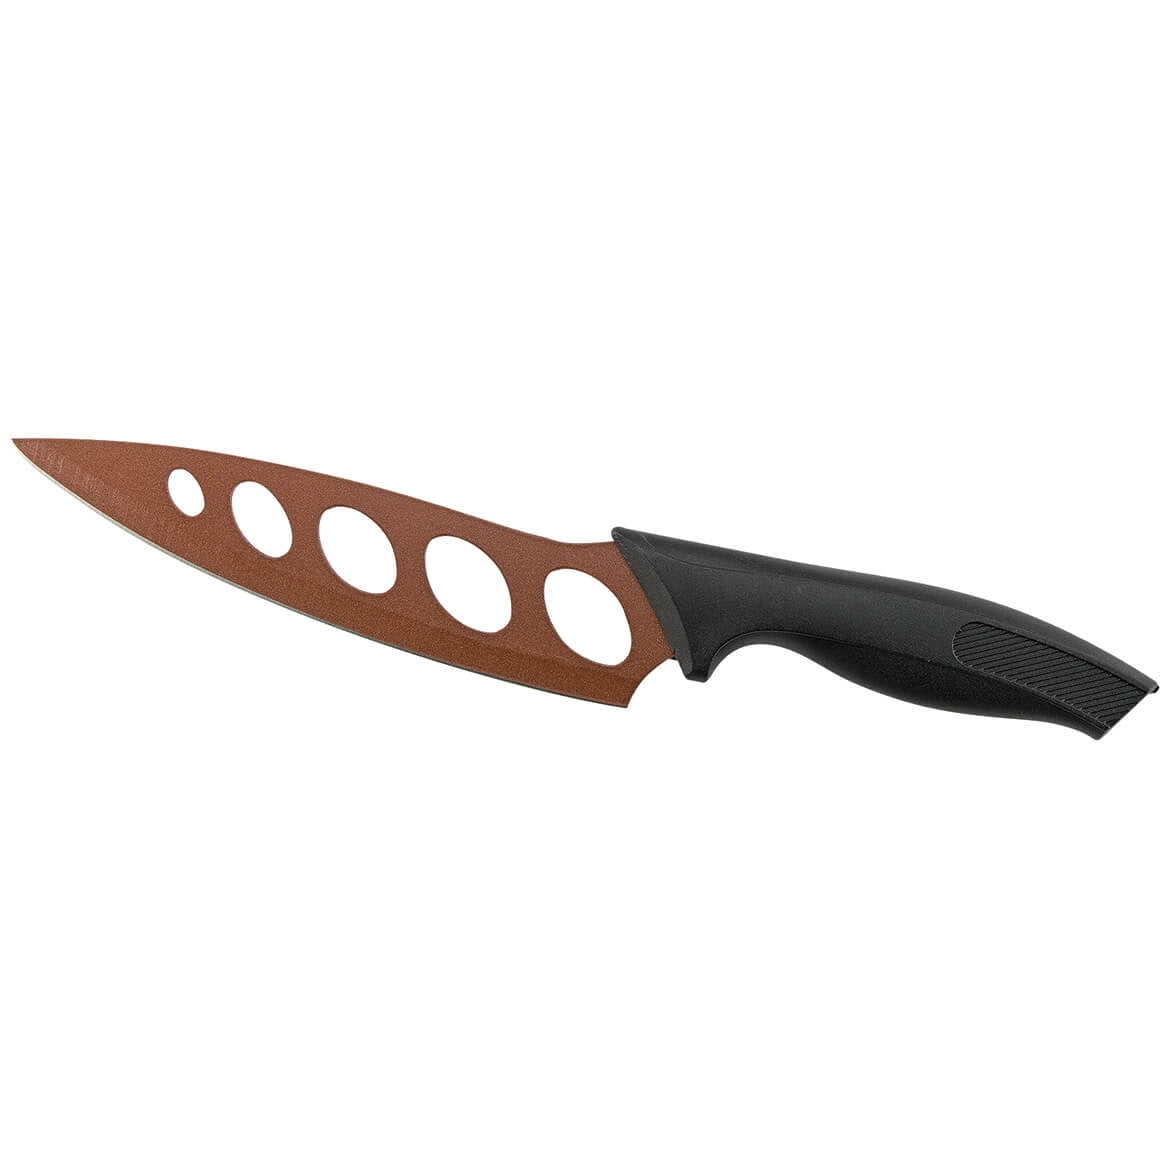 Copper Knife - 2 Pack. Never Needs Sharpening - COPPER KNIFE Stainless  Steel Stays Sharp Forever